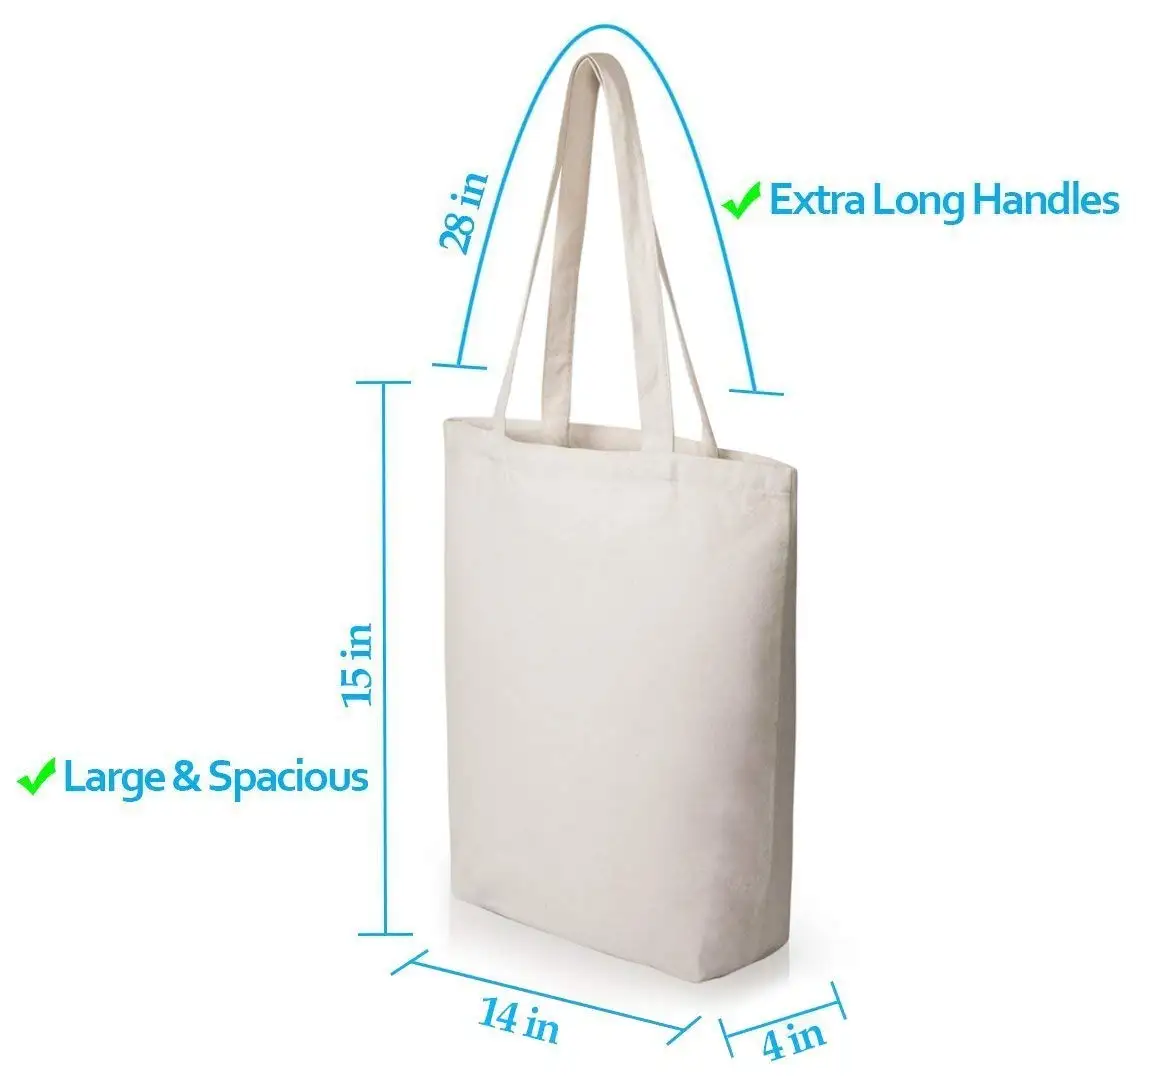 Plain White Simple Canvas Bag Cotton Tote Shopping Bag - Buy Cotton ...